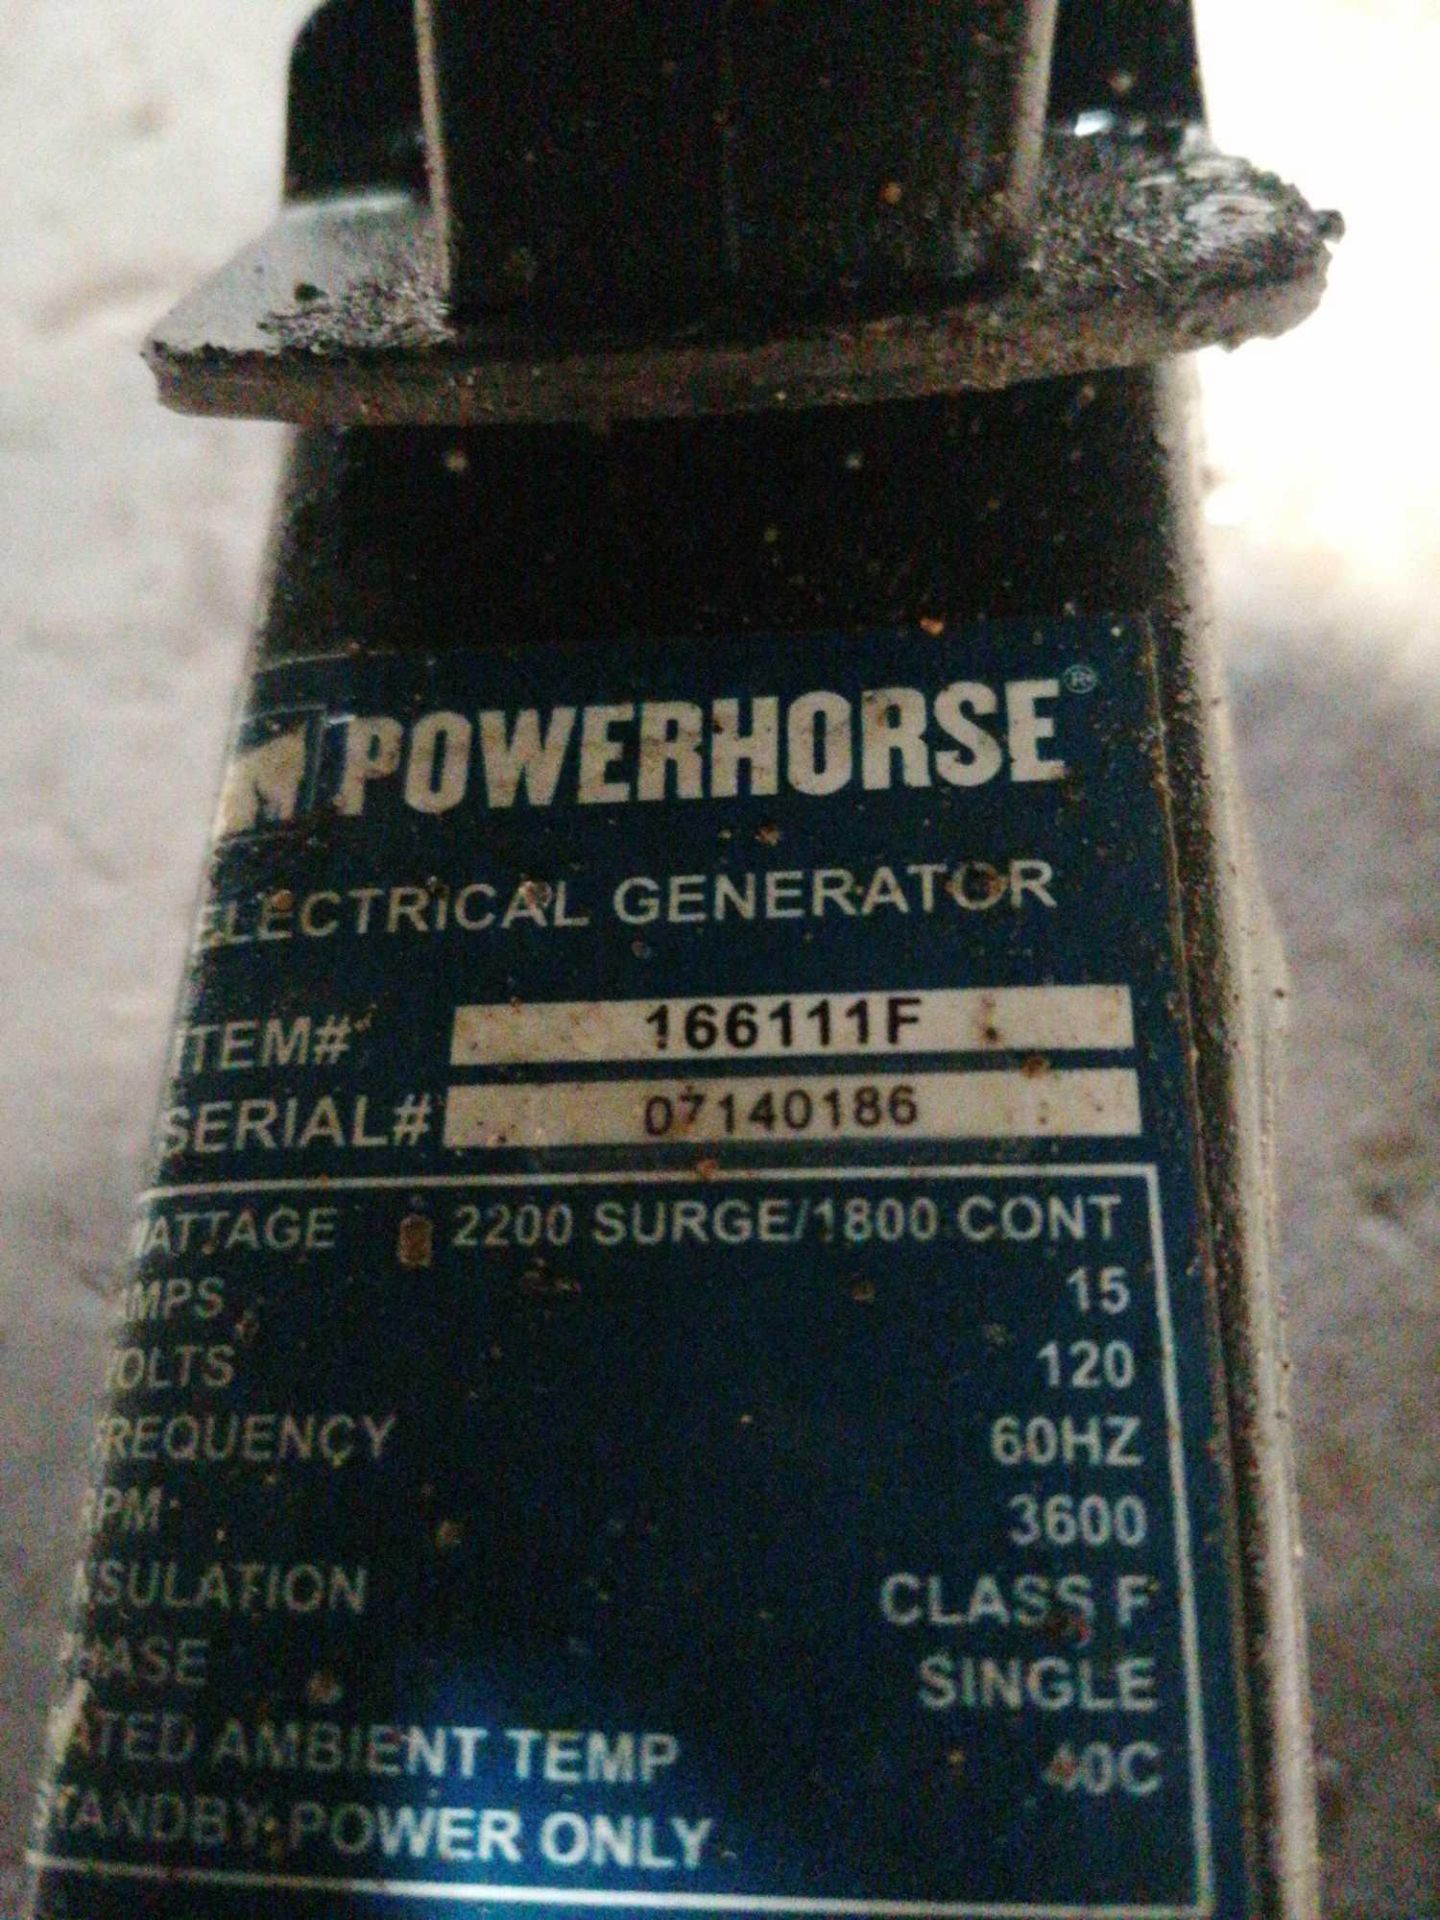 Powerhorse 2200 Electric Generator - Image 4 of 4